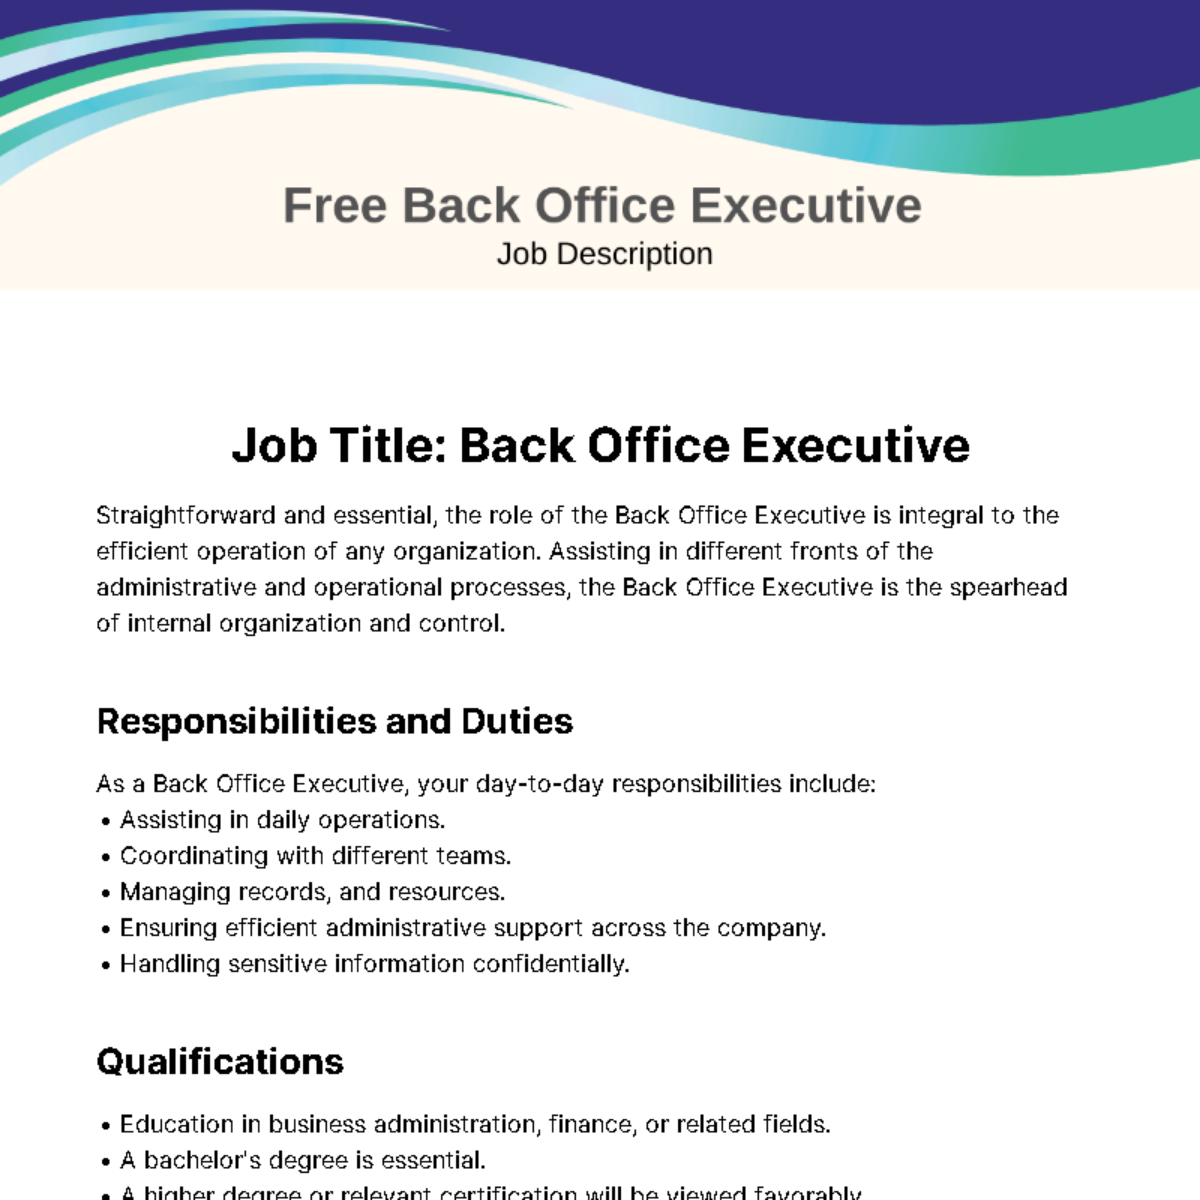 Back Office Executive Job Description Template